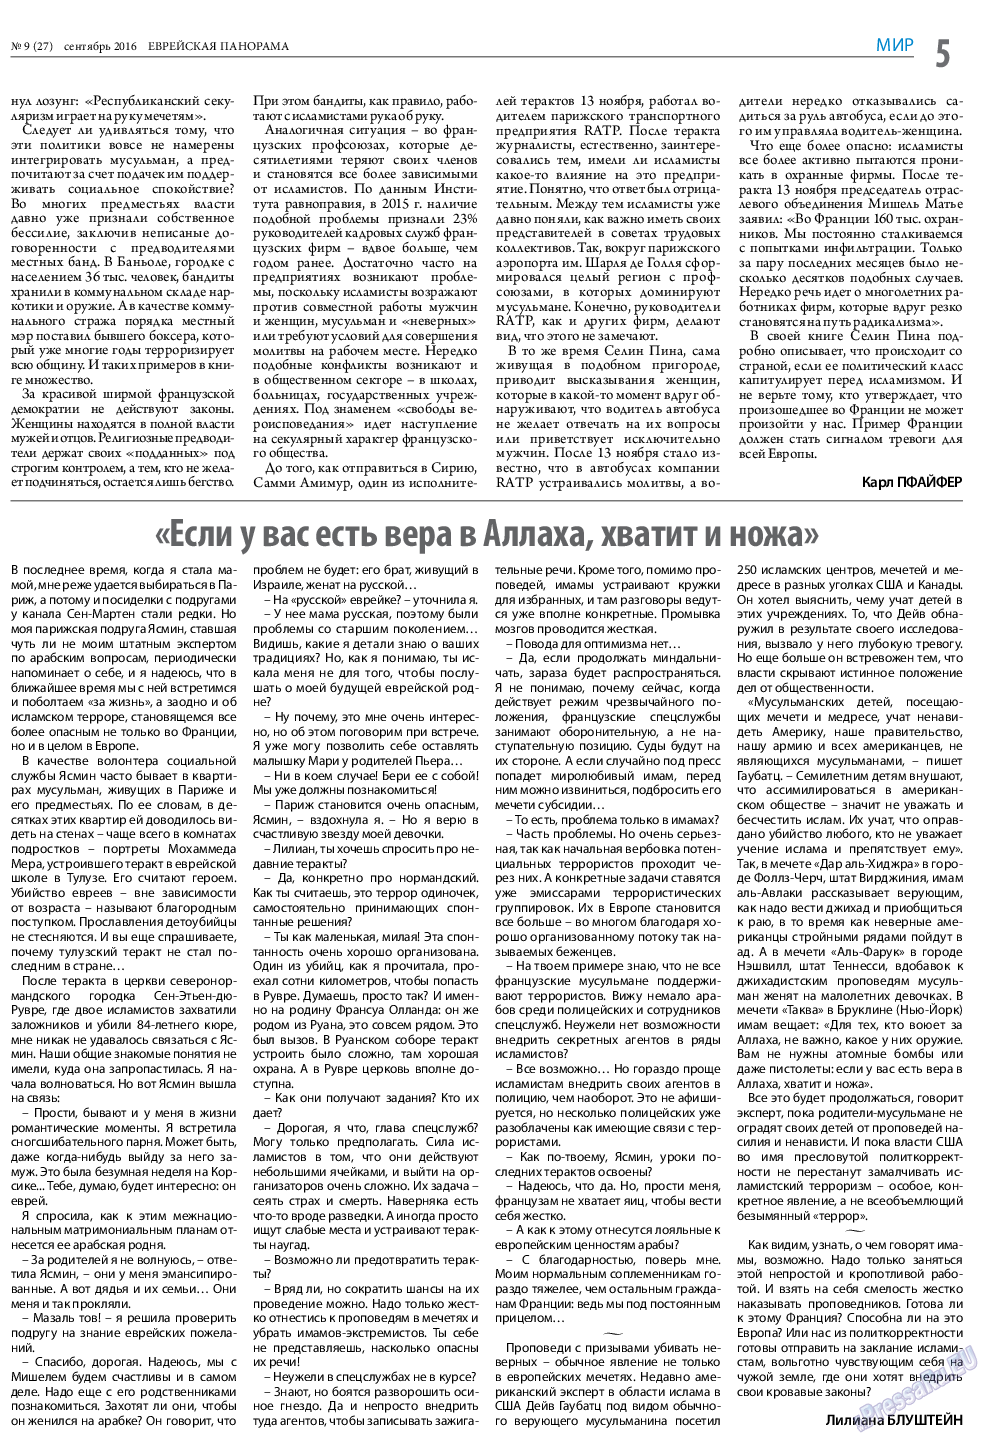 Еврейская панорама, газета. 2016 №9 стр.5